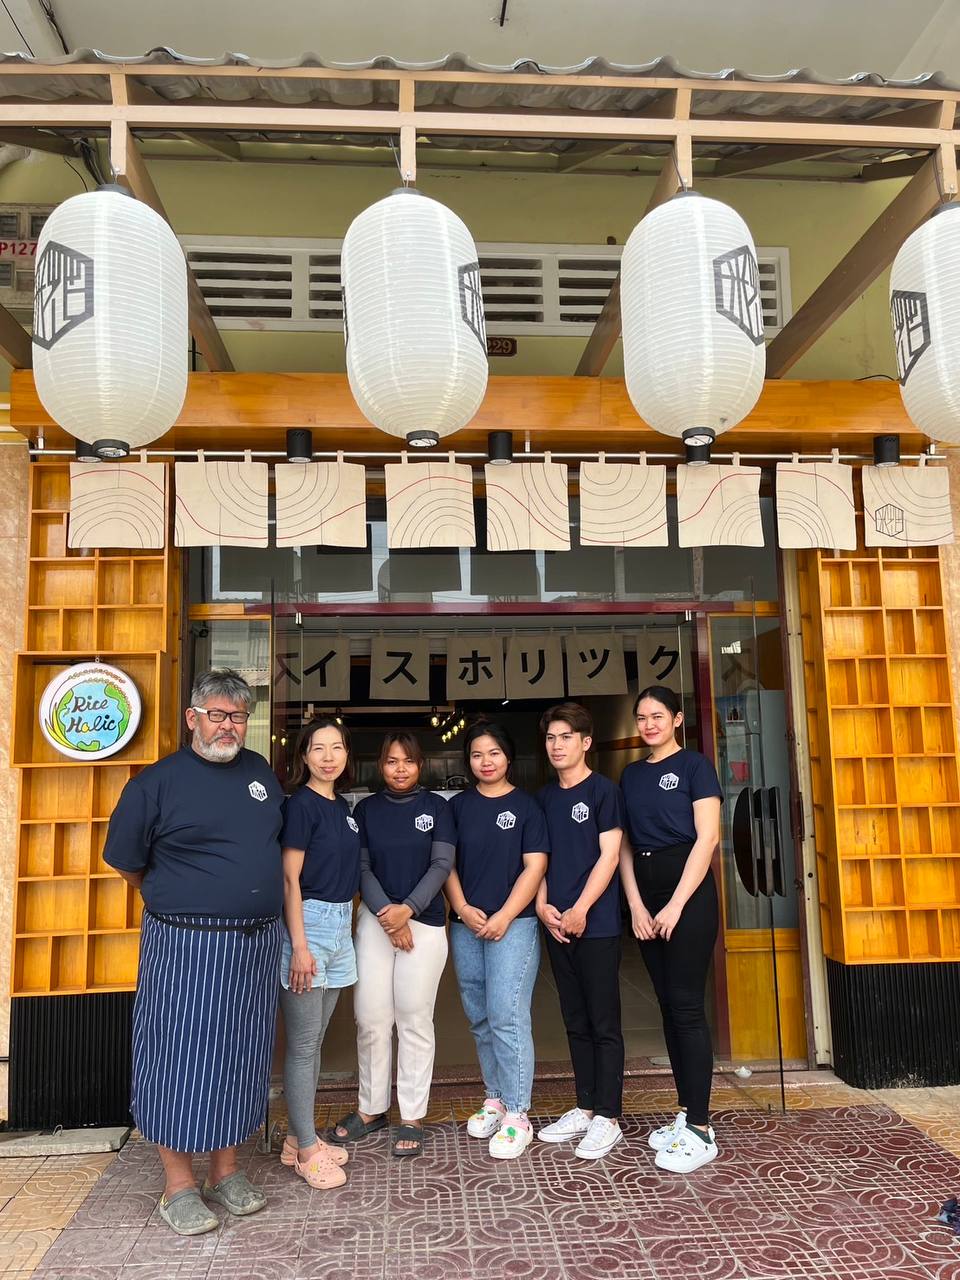 Riceholic Japanese Probiotic restaurant